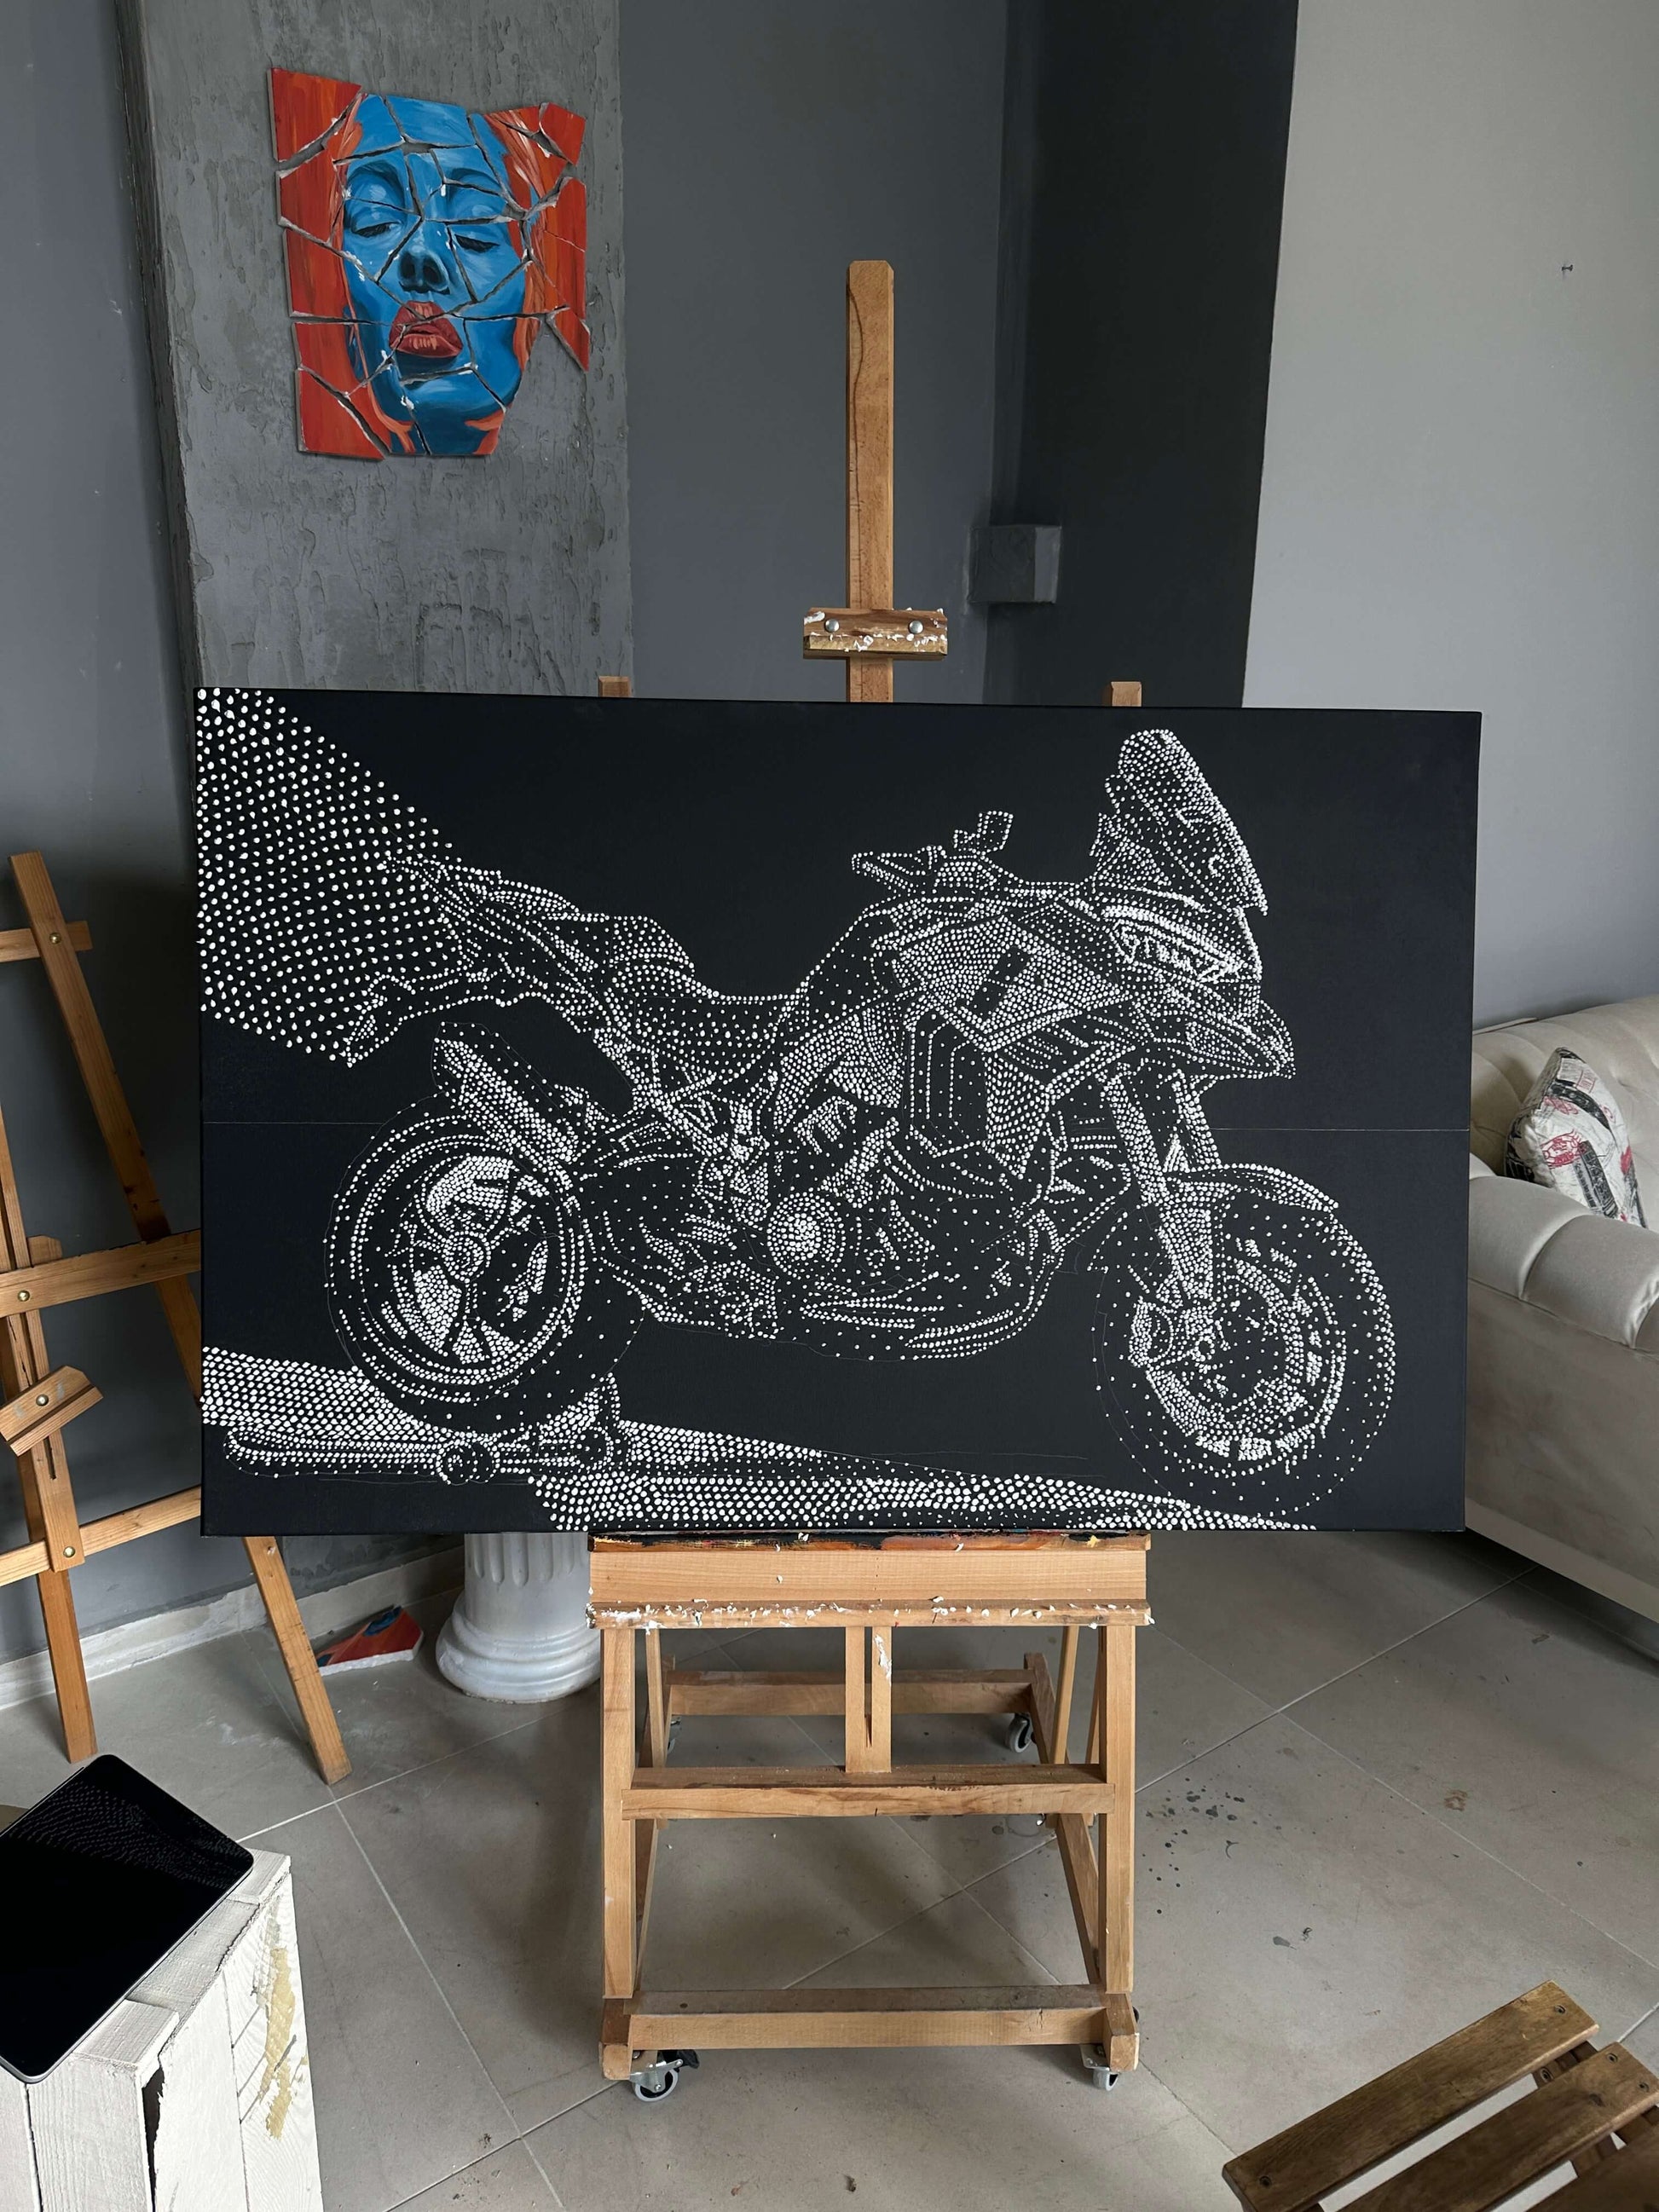 Motorcycle Artwork, Pointillism Painting, Moto Art Gallery, Acrylic Motorcycle Design, Canvas Art for Bikers, Urban Motorcycle Art, Pointillism on Canvas, Motorcycle Illustration, Hand-painted Moto Art, Decorative Bike Art